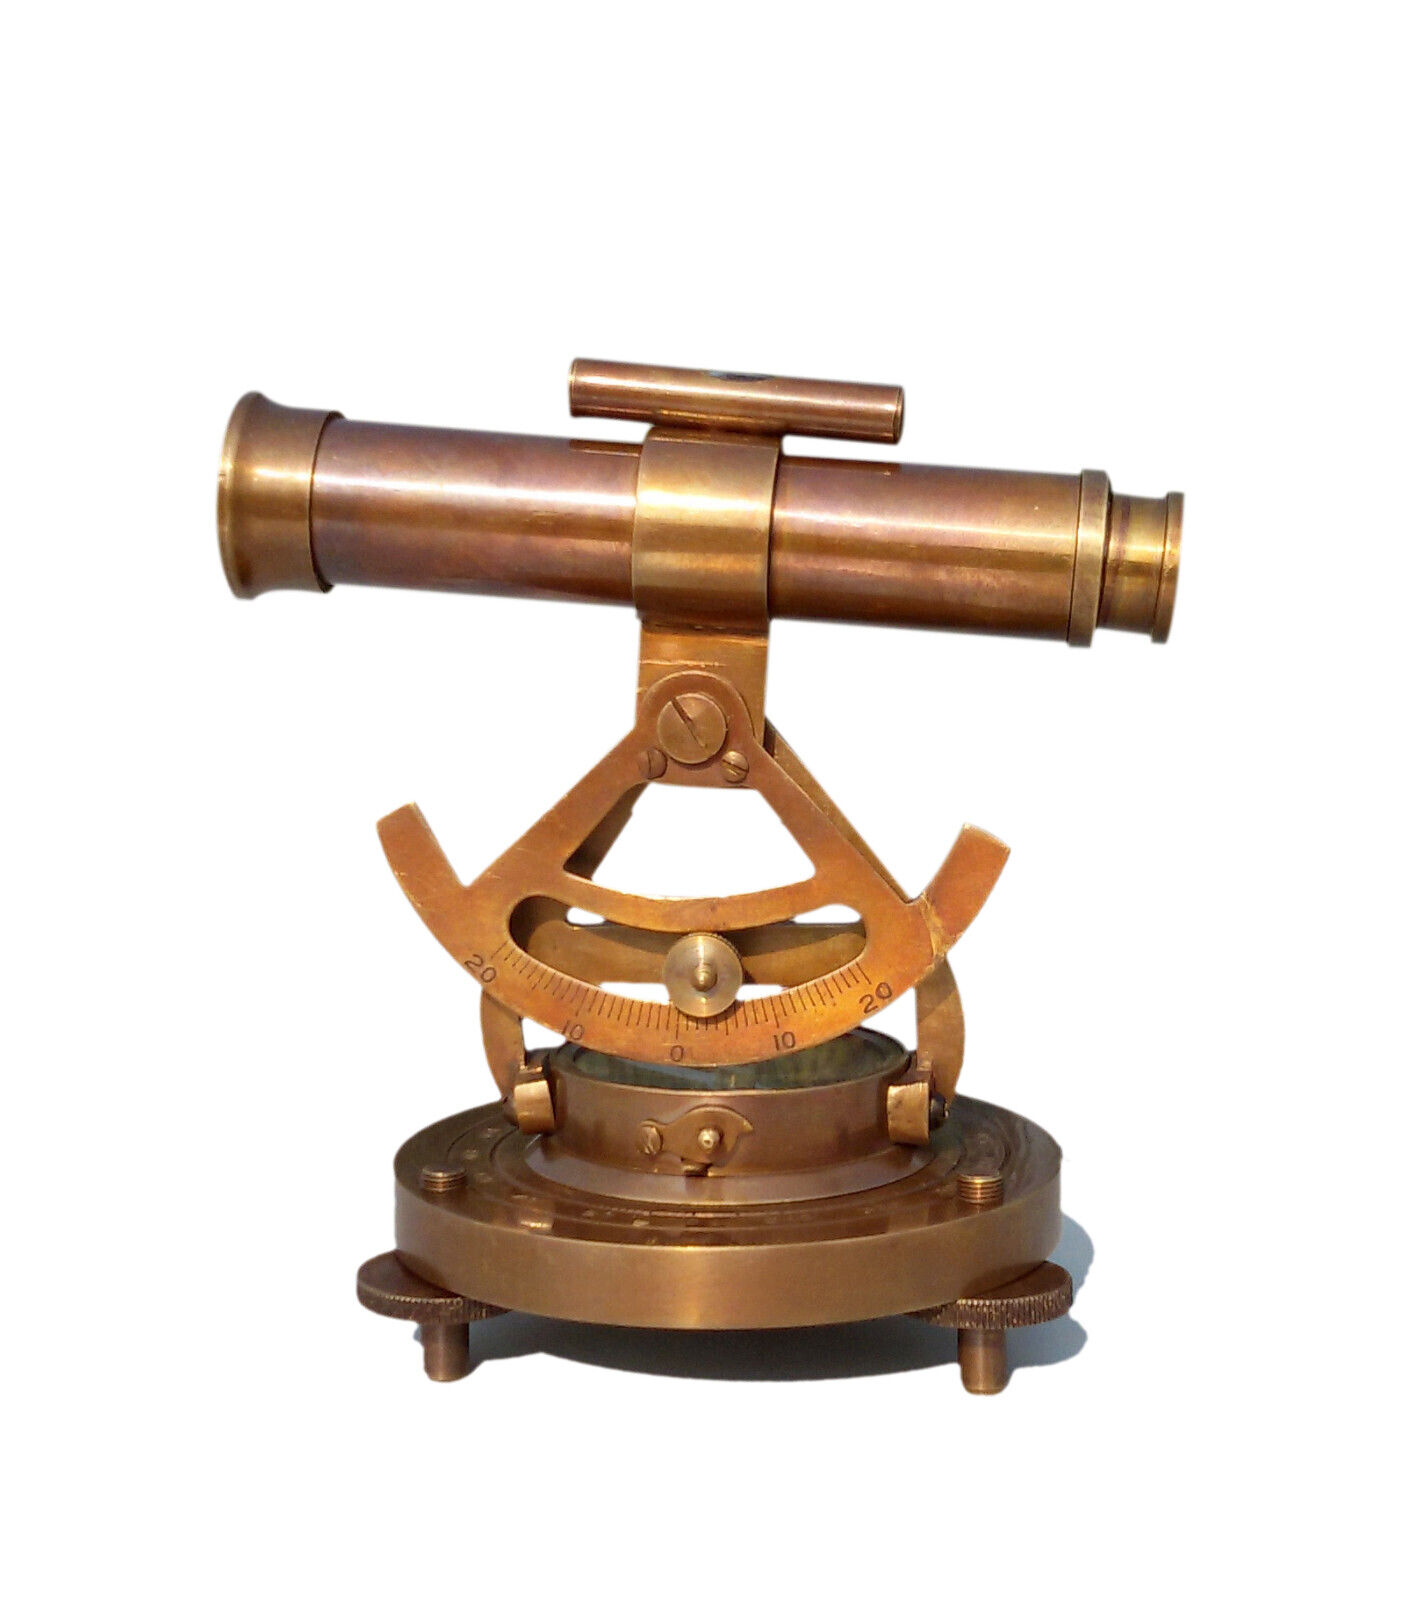 Antique Replica Theodolite alidade telescope compass survey instrument antique